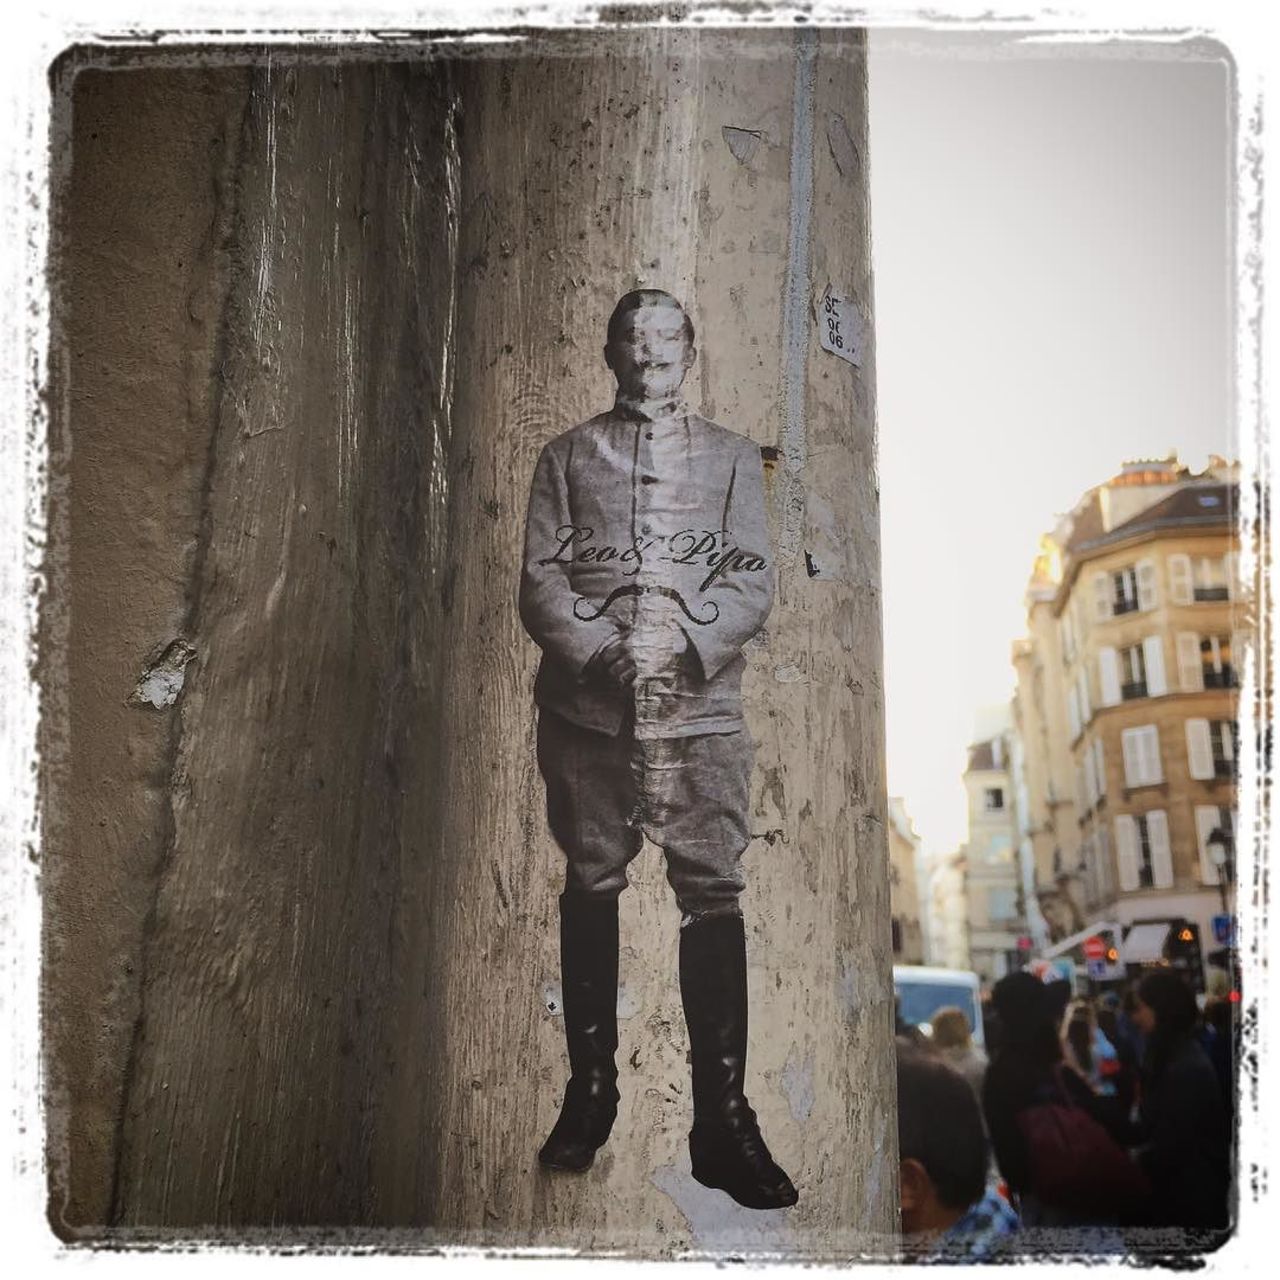 #Paris #graffiti photo by @gabyinparis http://ift.tt/1jCaRyH #StreetArt https://t.co/19Jj94rcB8